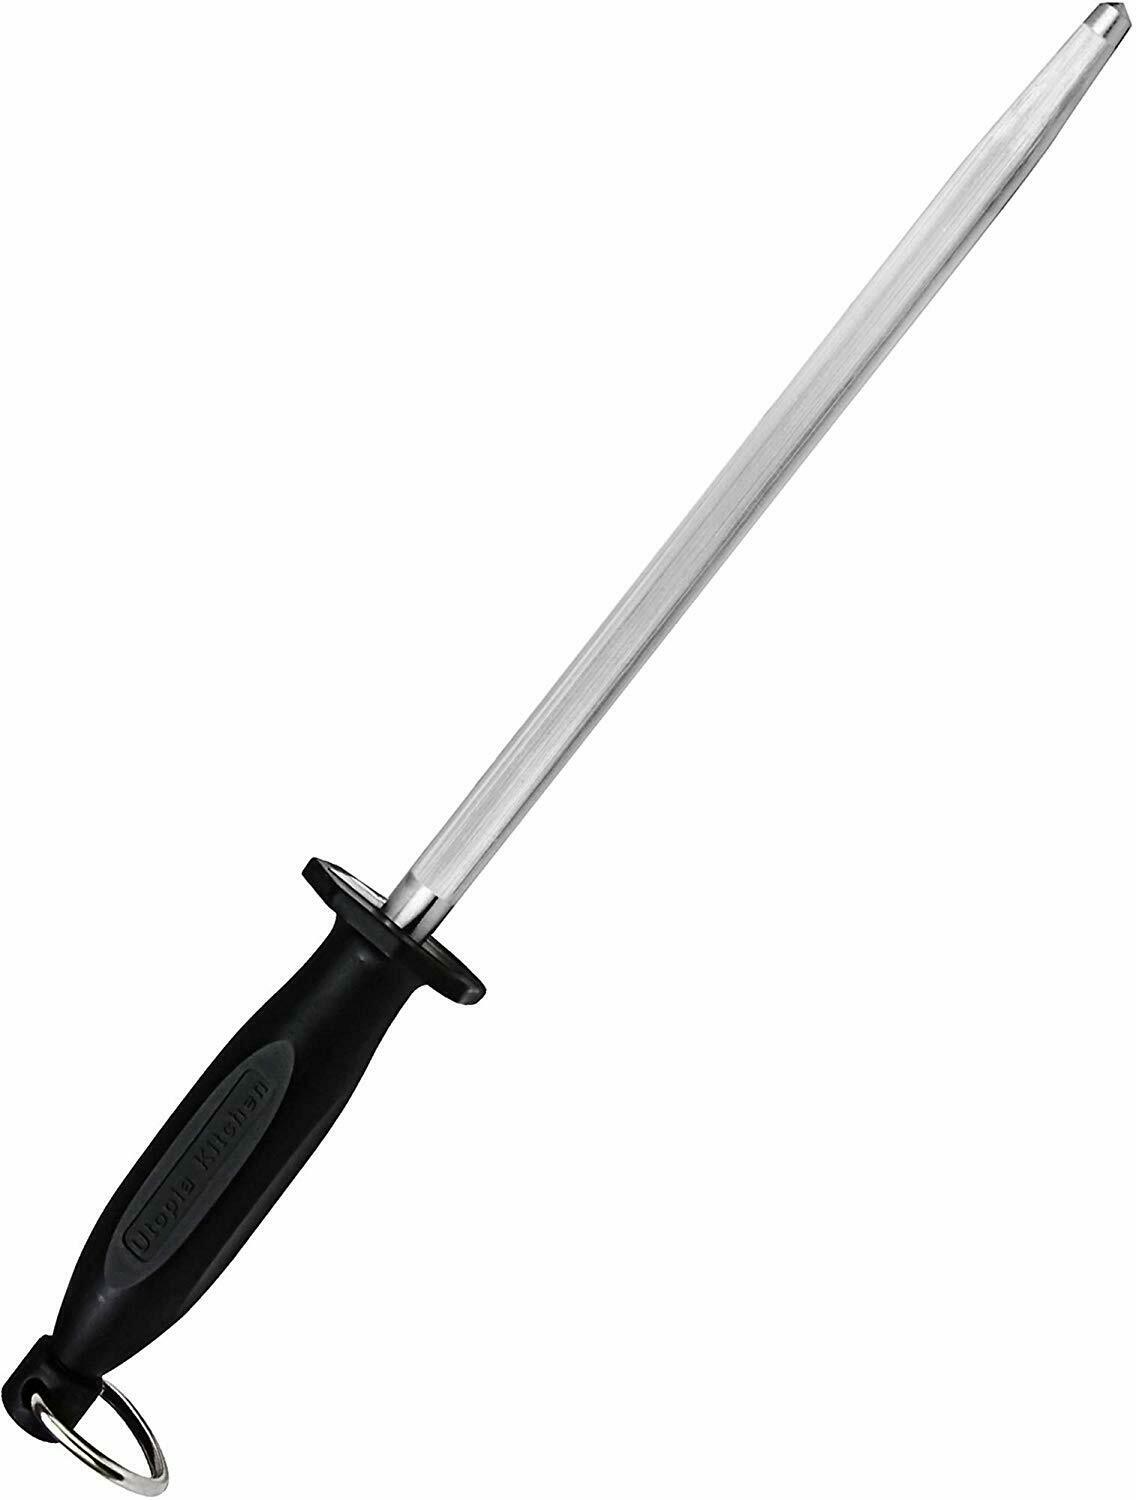 Honing Steel Knife Sharpening Steel Sharpening Rod 10 & 12 Inches Utopia Kitchen